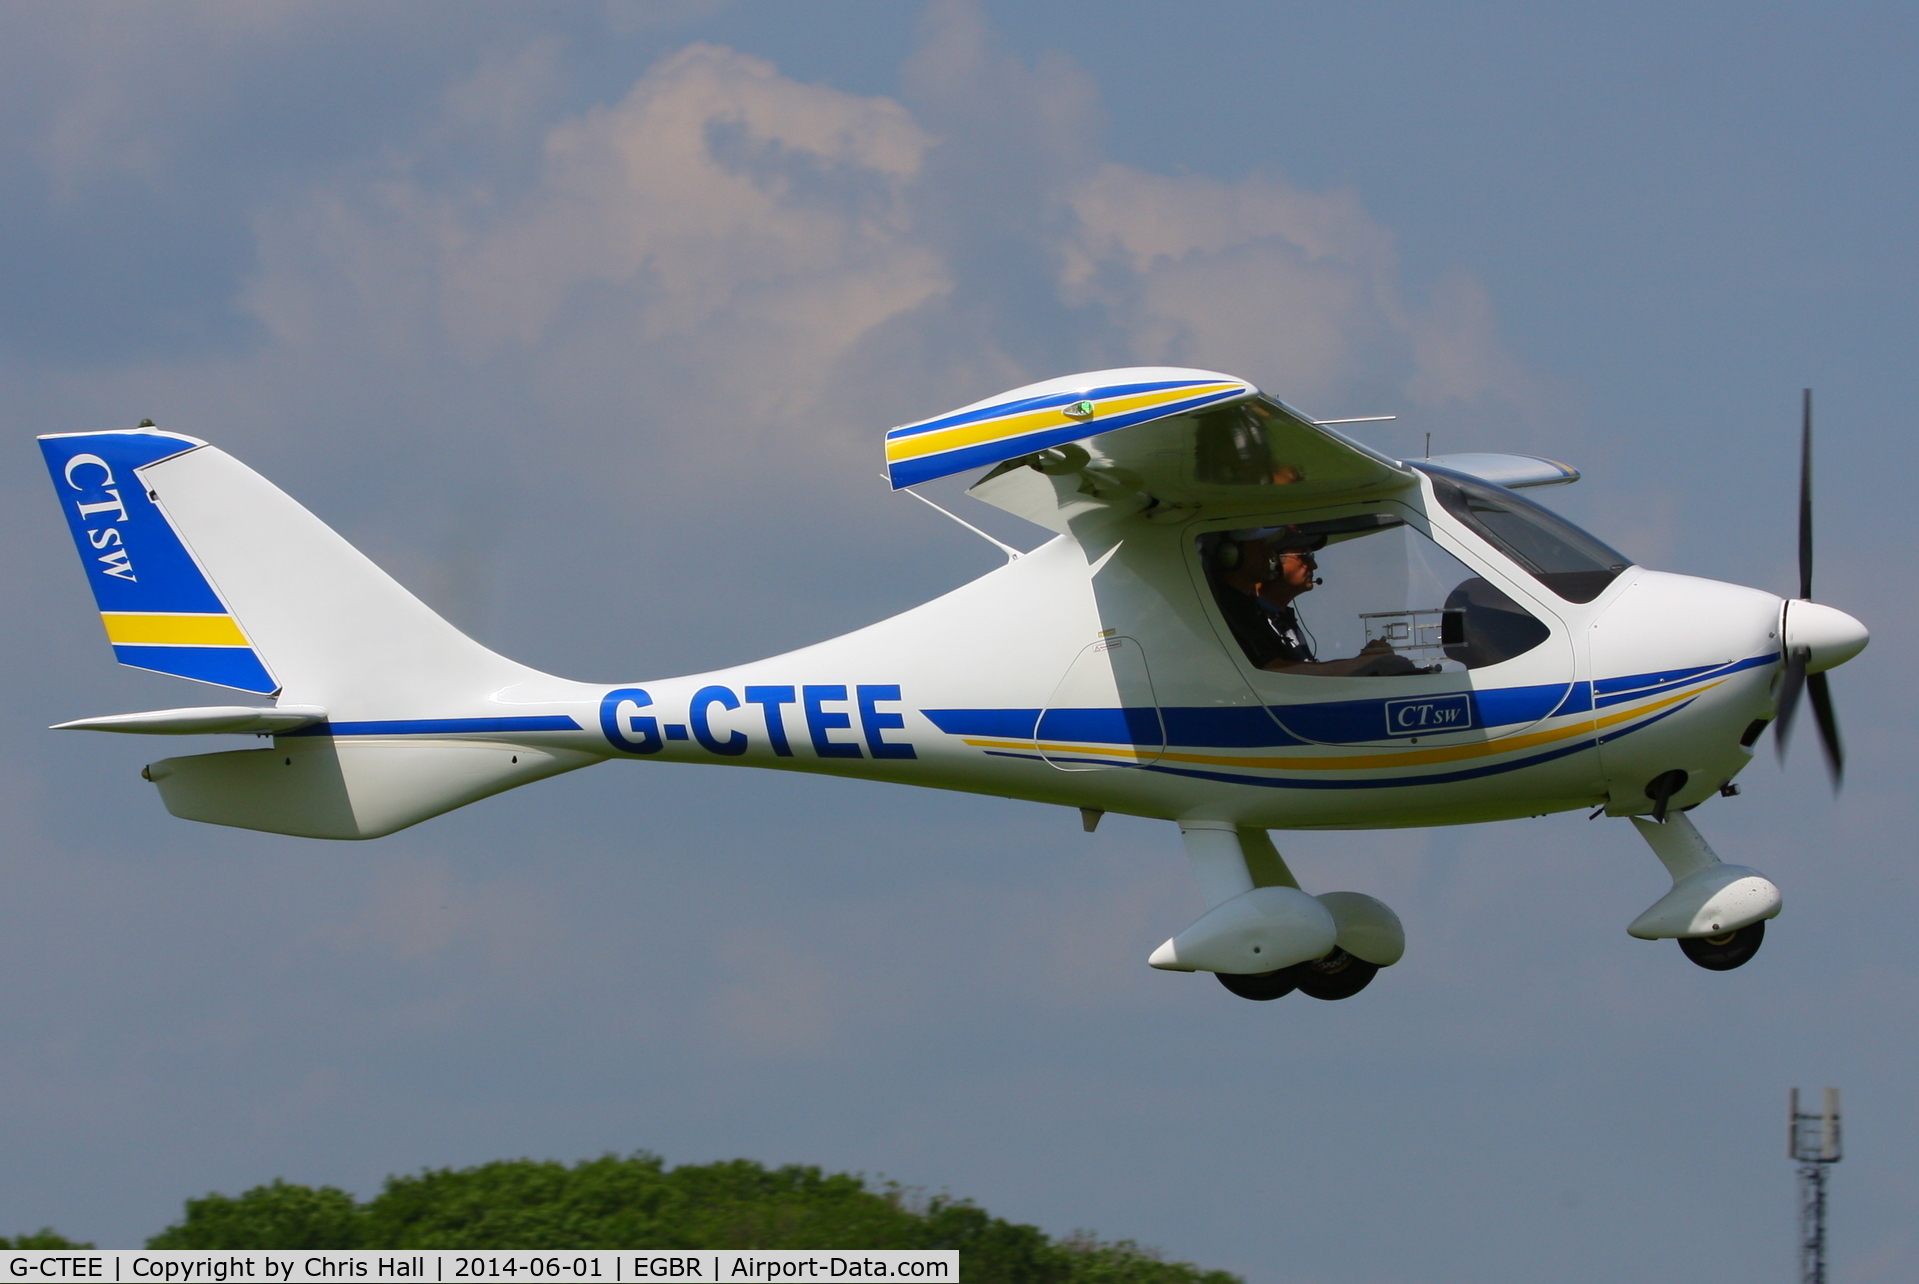 G-CTEE, 2007 Flight Design CTSW C/N 8269, at Breighton's Open Cockpit & Biplane Fly-in, 2014